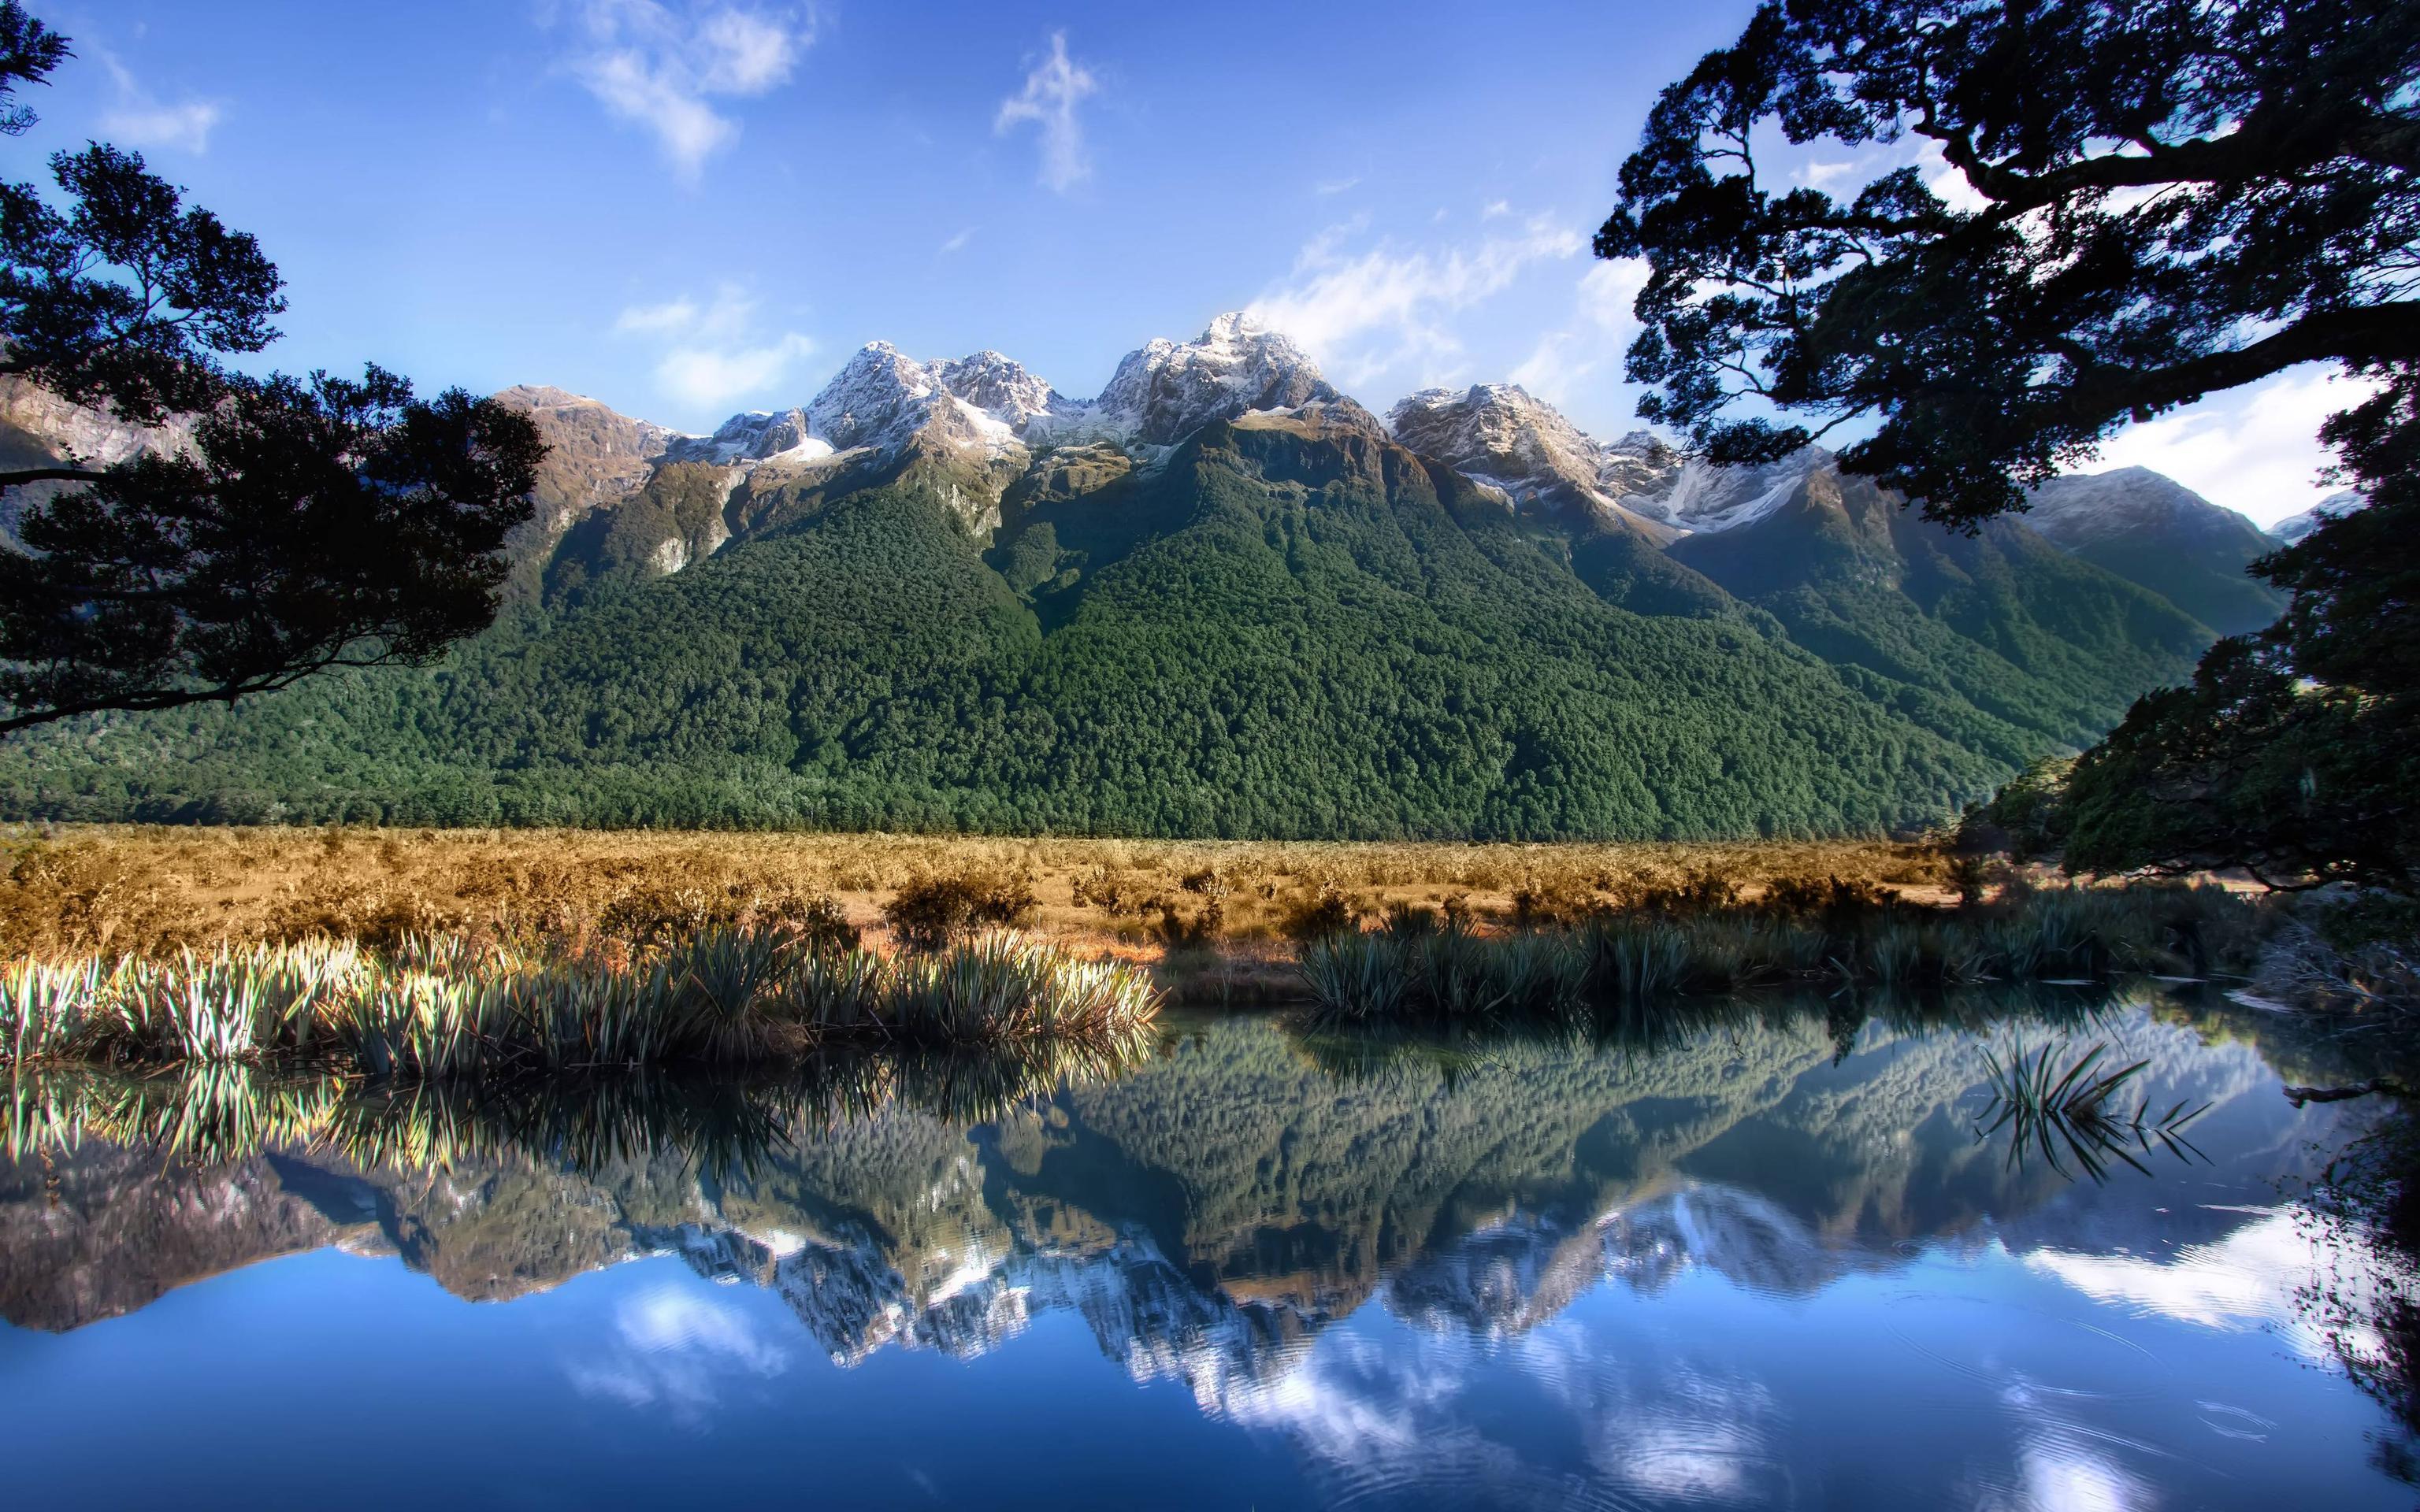 New Zealand, Milford Sound, Mirror Lake widescreen wallpaper. Wide